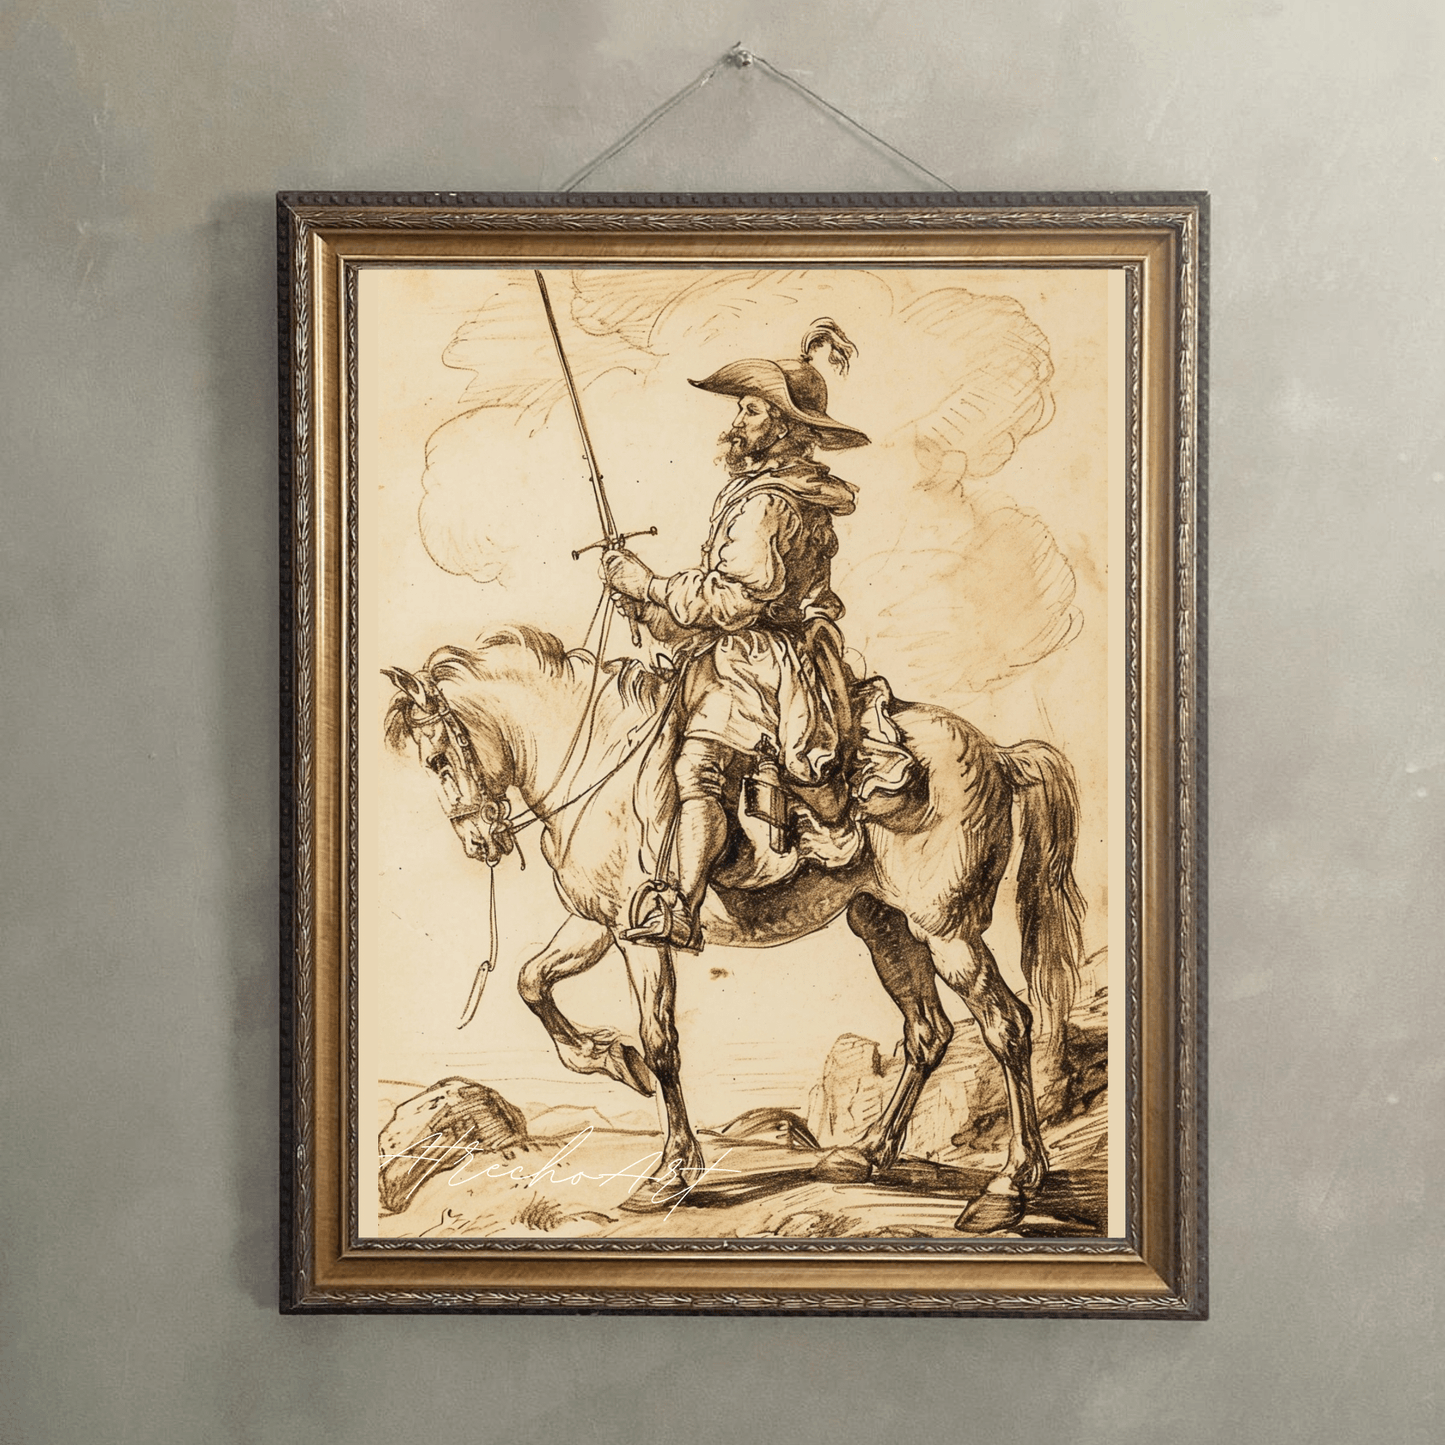 MAN ON A HORSE | Printed Artwork | PE88